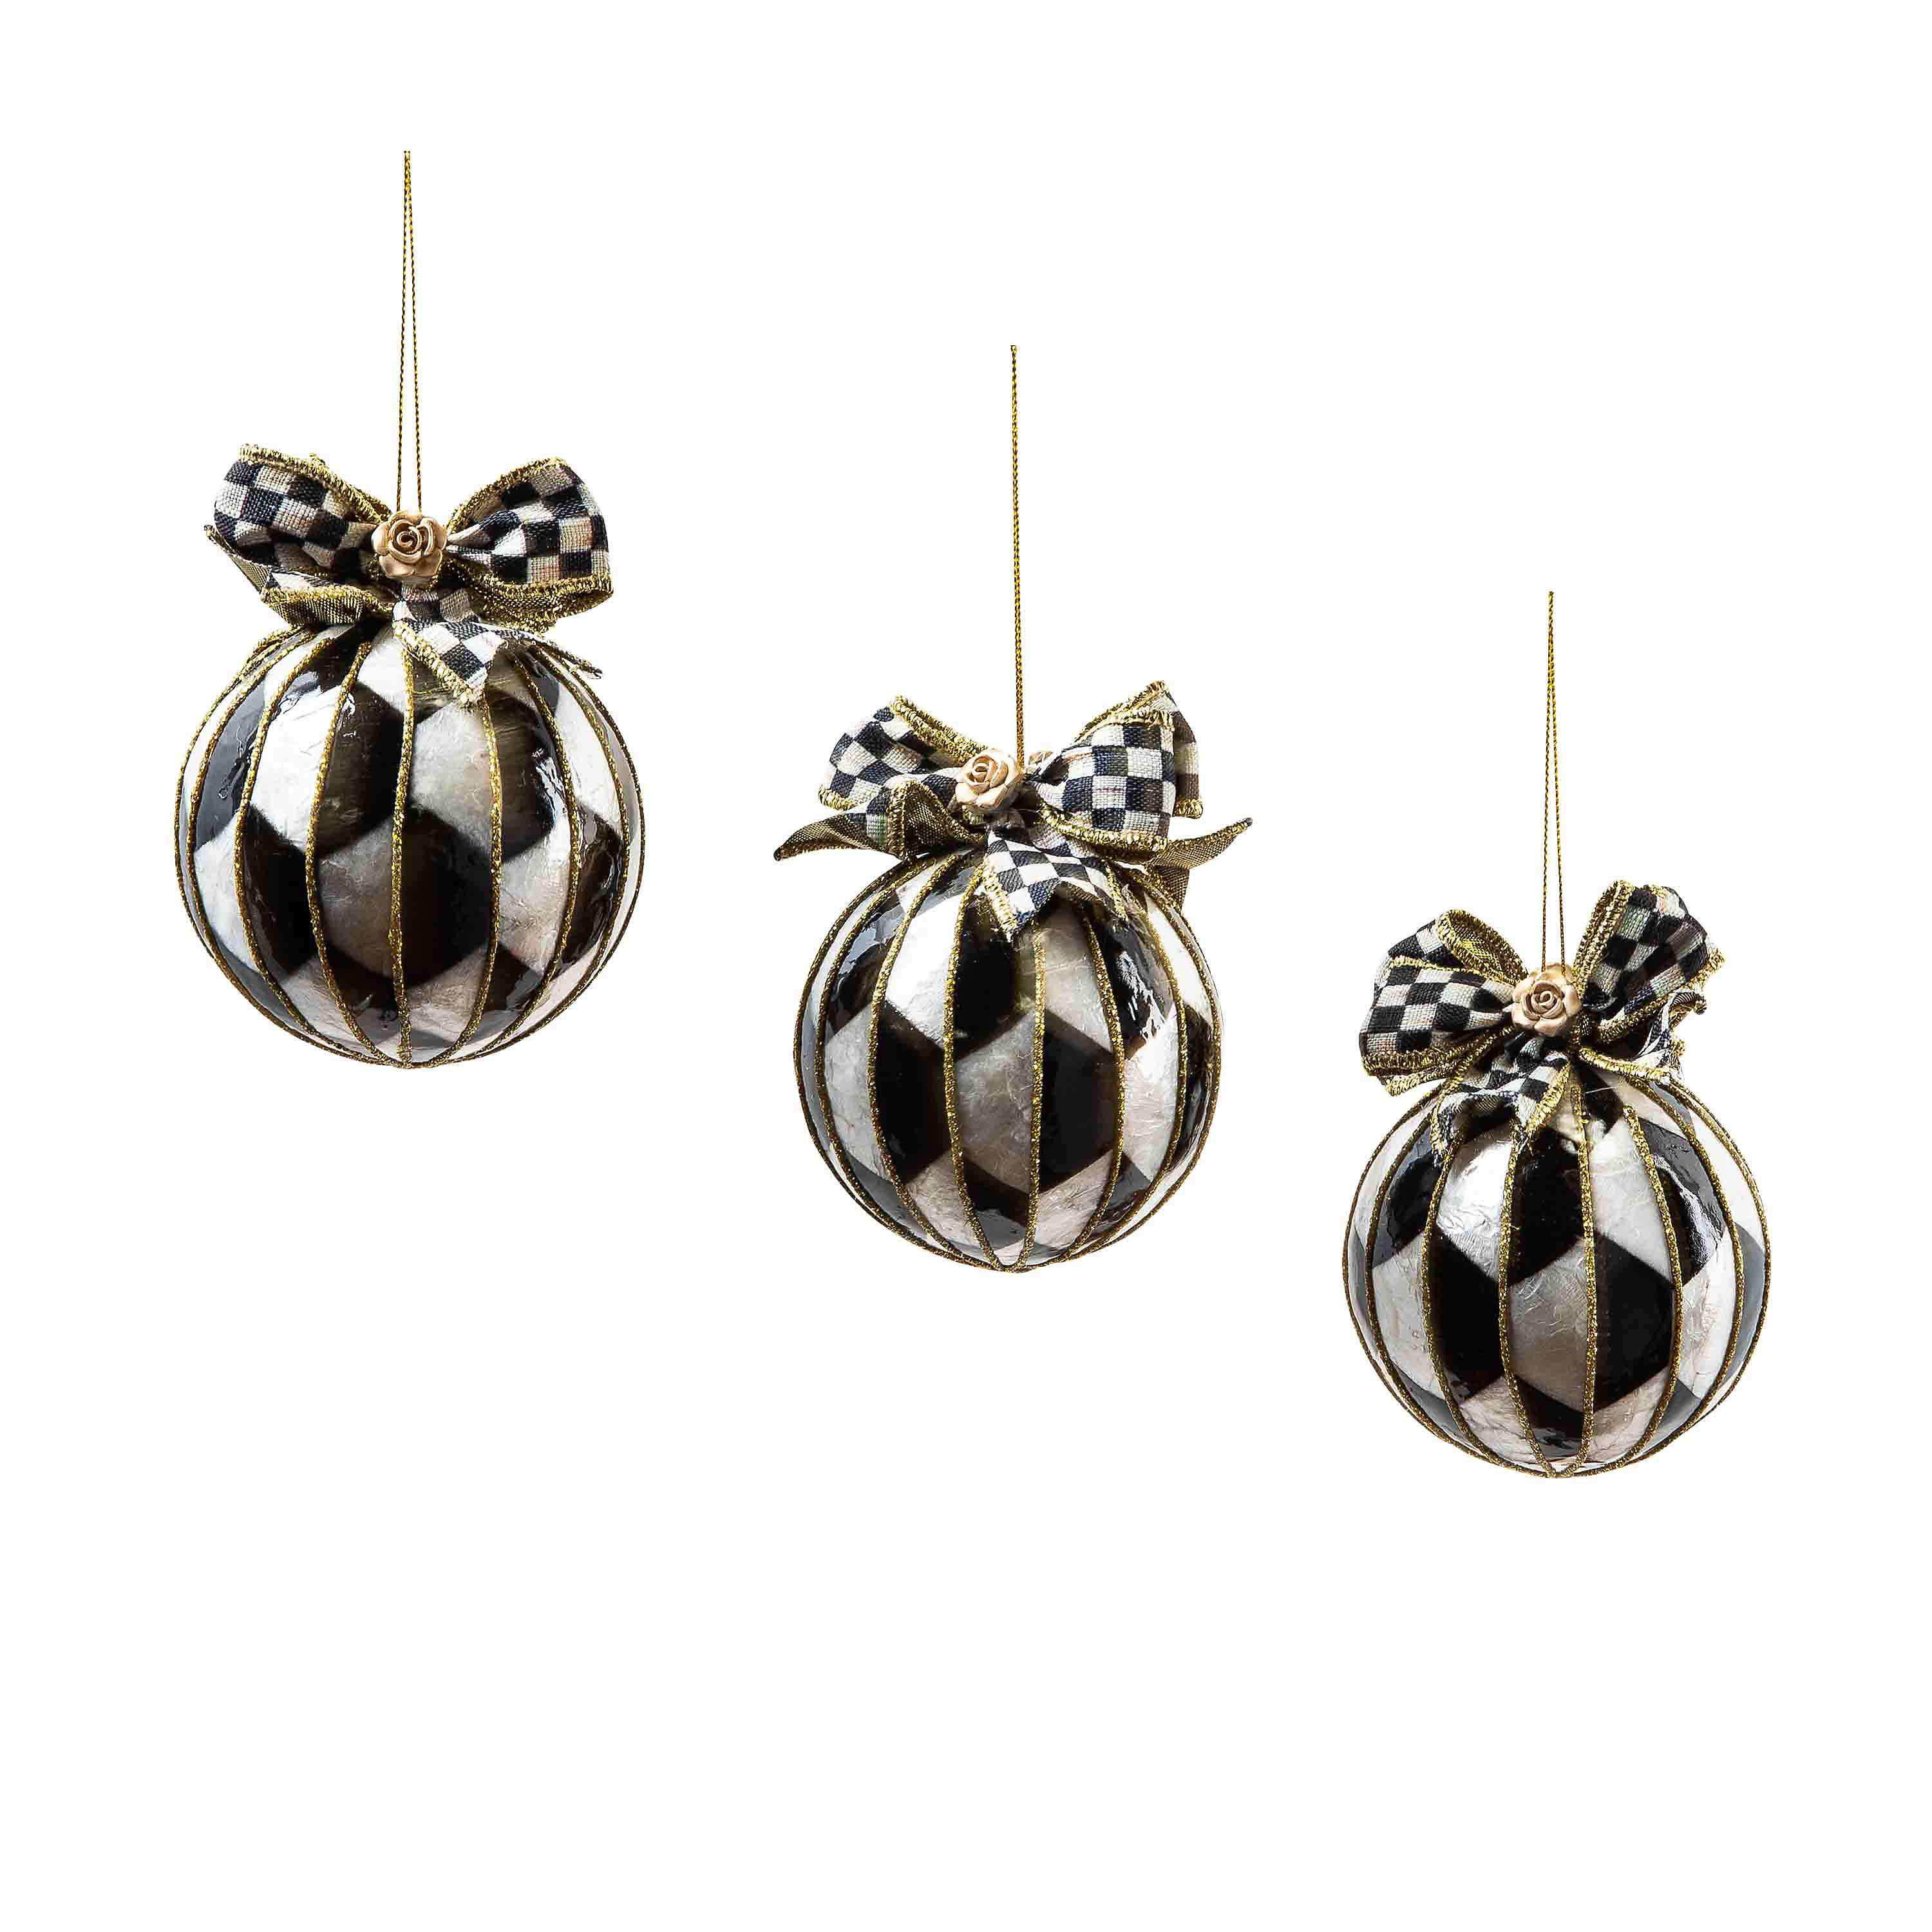 Glam Up Capiz Ball Ornaments, Set of 3 mackenzie-childs Panama 0